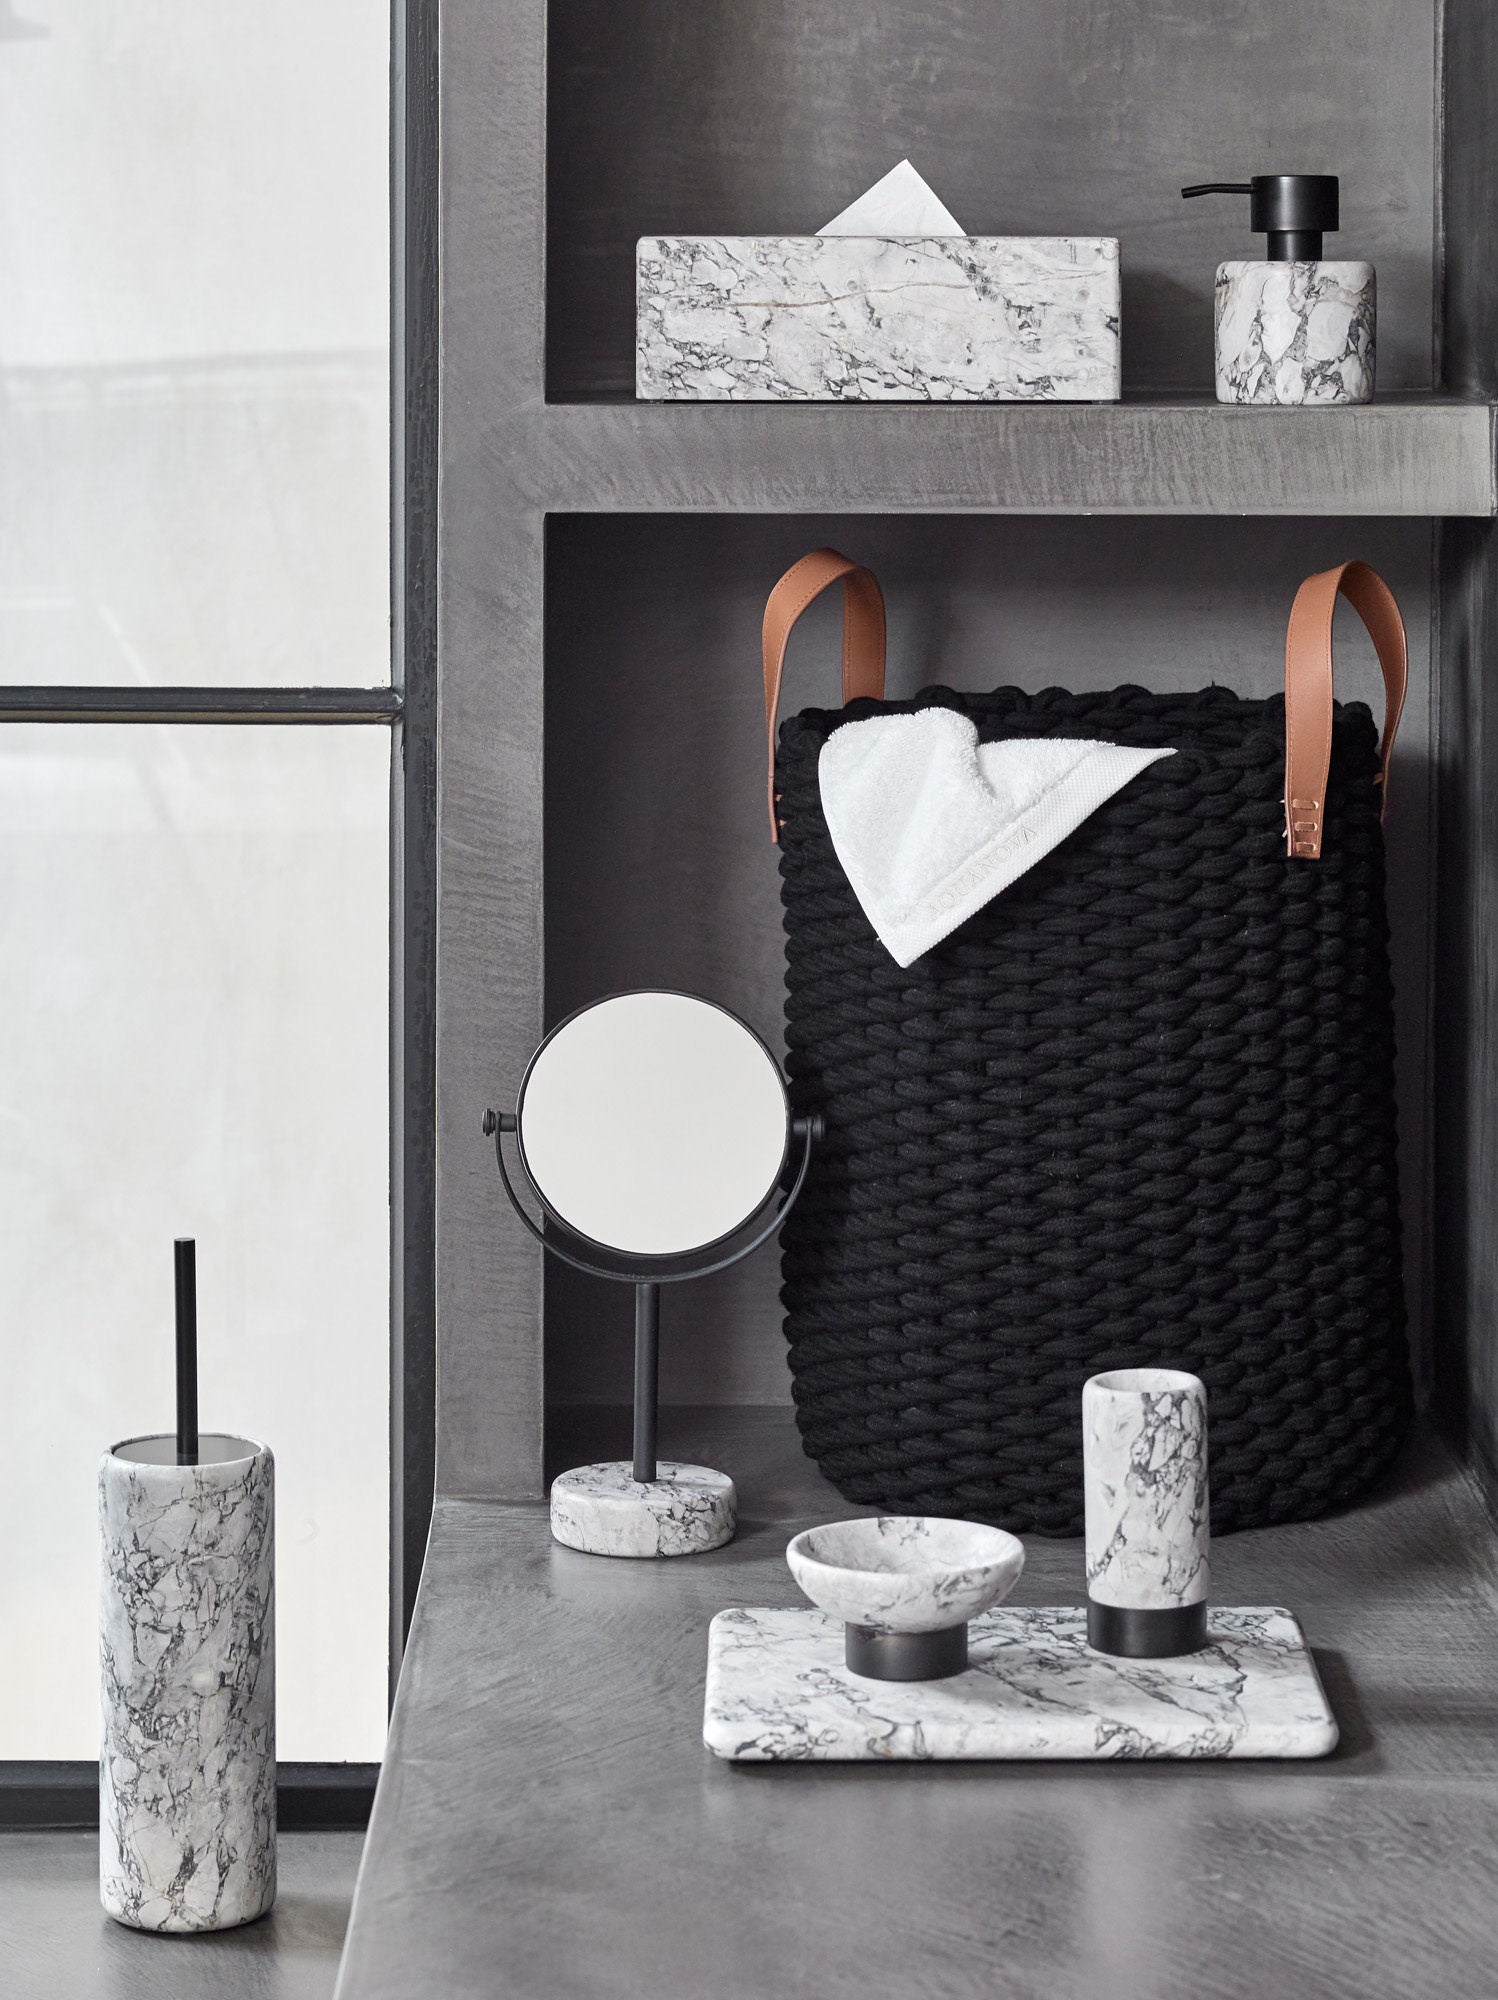 Nero White Stone Bathroom Accessories - Luxury Tissue Holder - |VESIMI Design| Luxury and Rustic bathrooms online